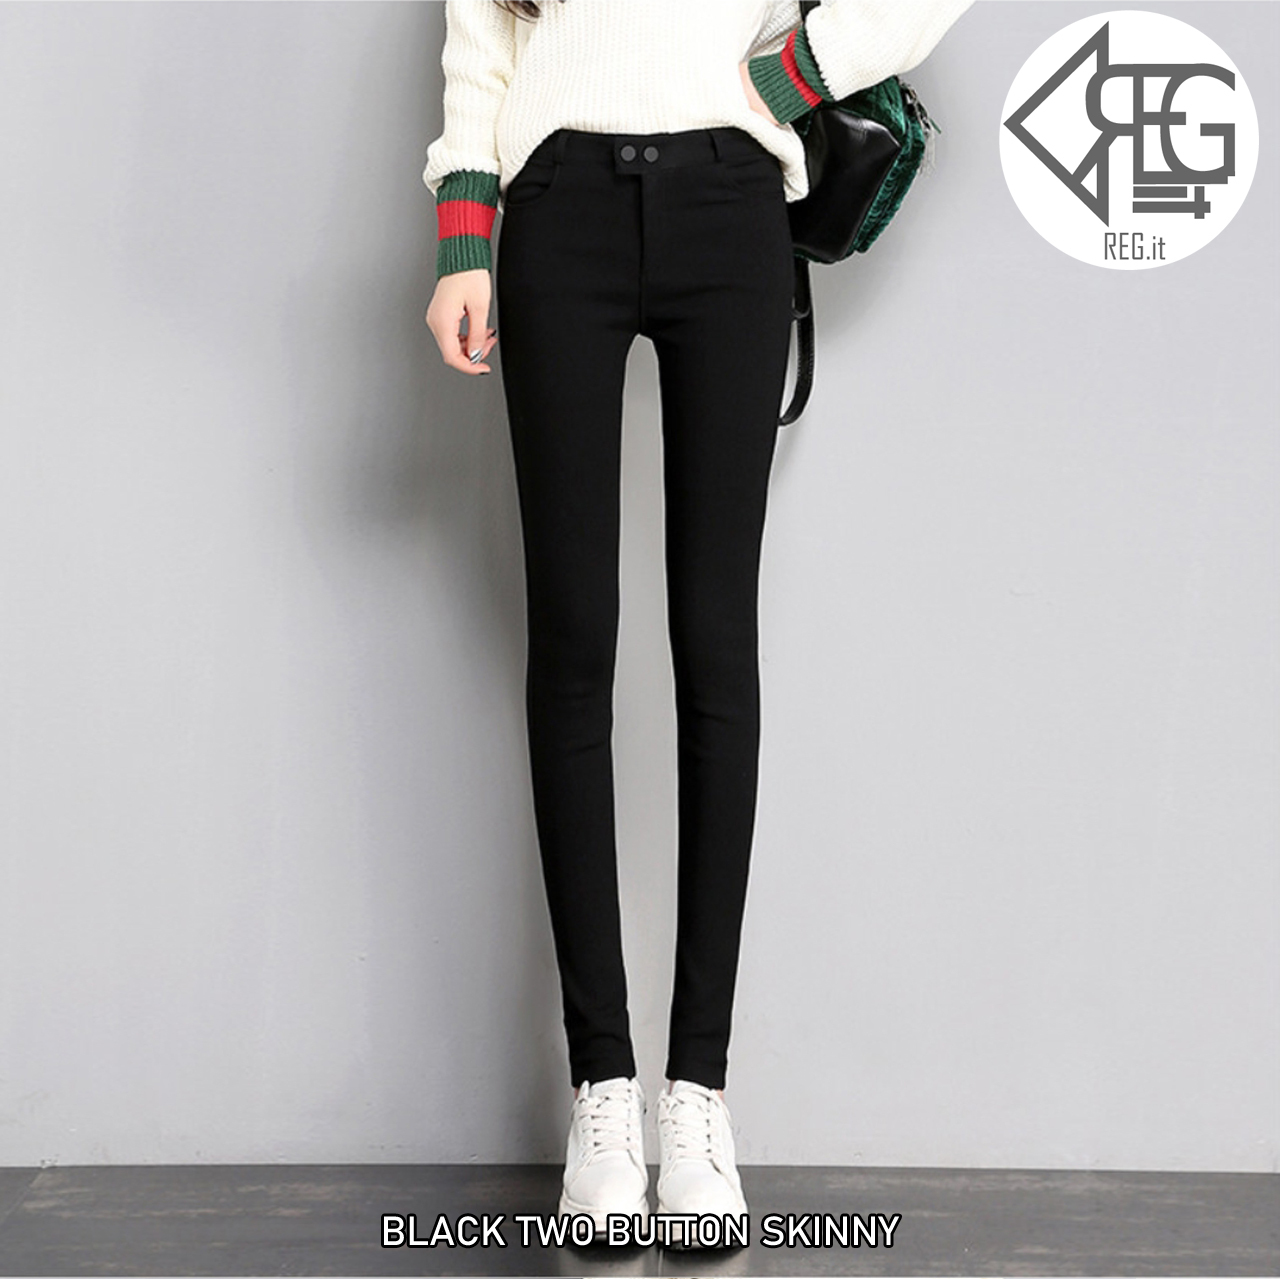 Regit 即納 Black Two Button Skinny 韓国ファッション スキニー 細見えパンツ パンツ スリム 美脚効果パンツ 10代代 Regit